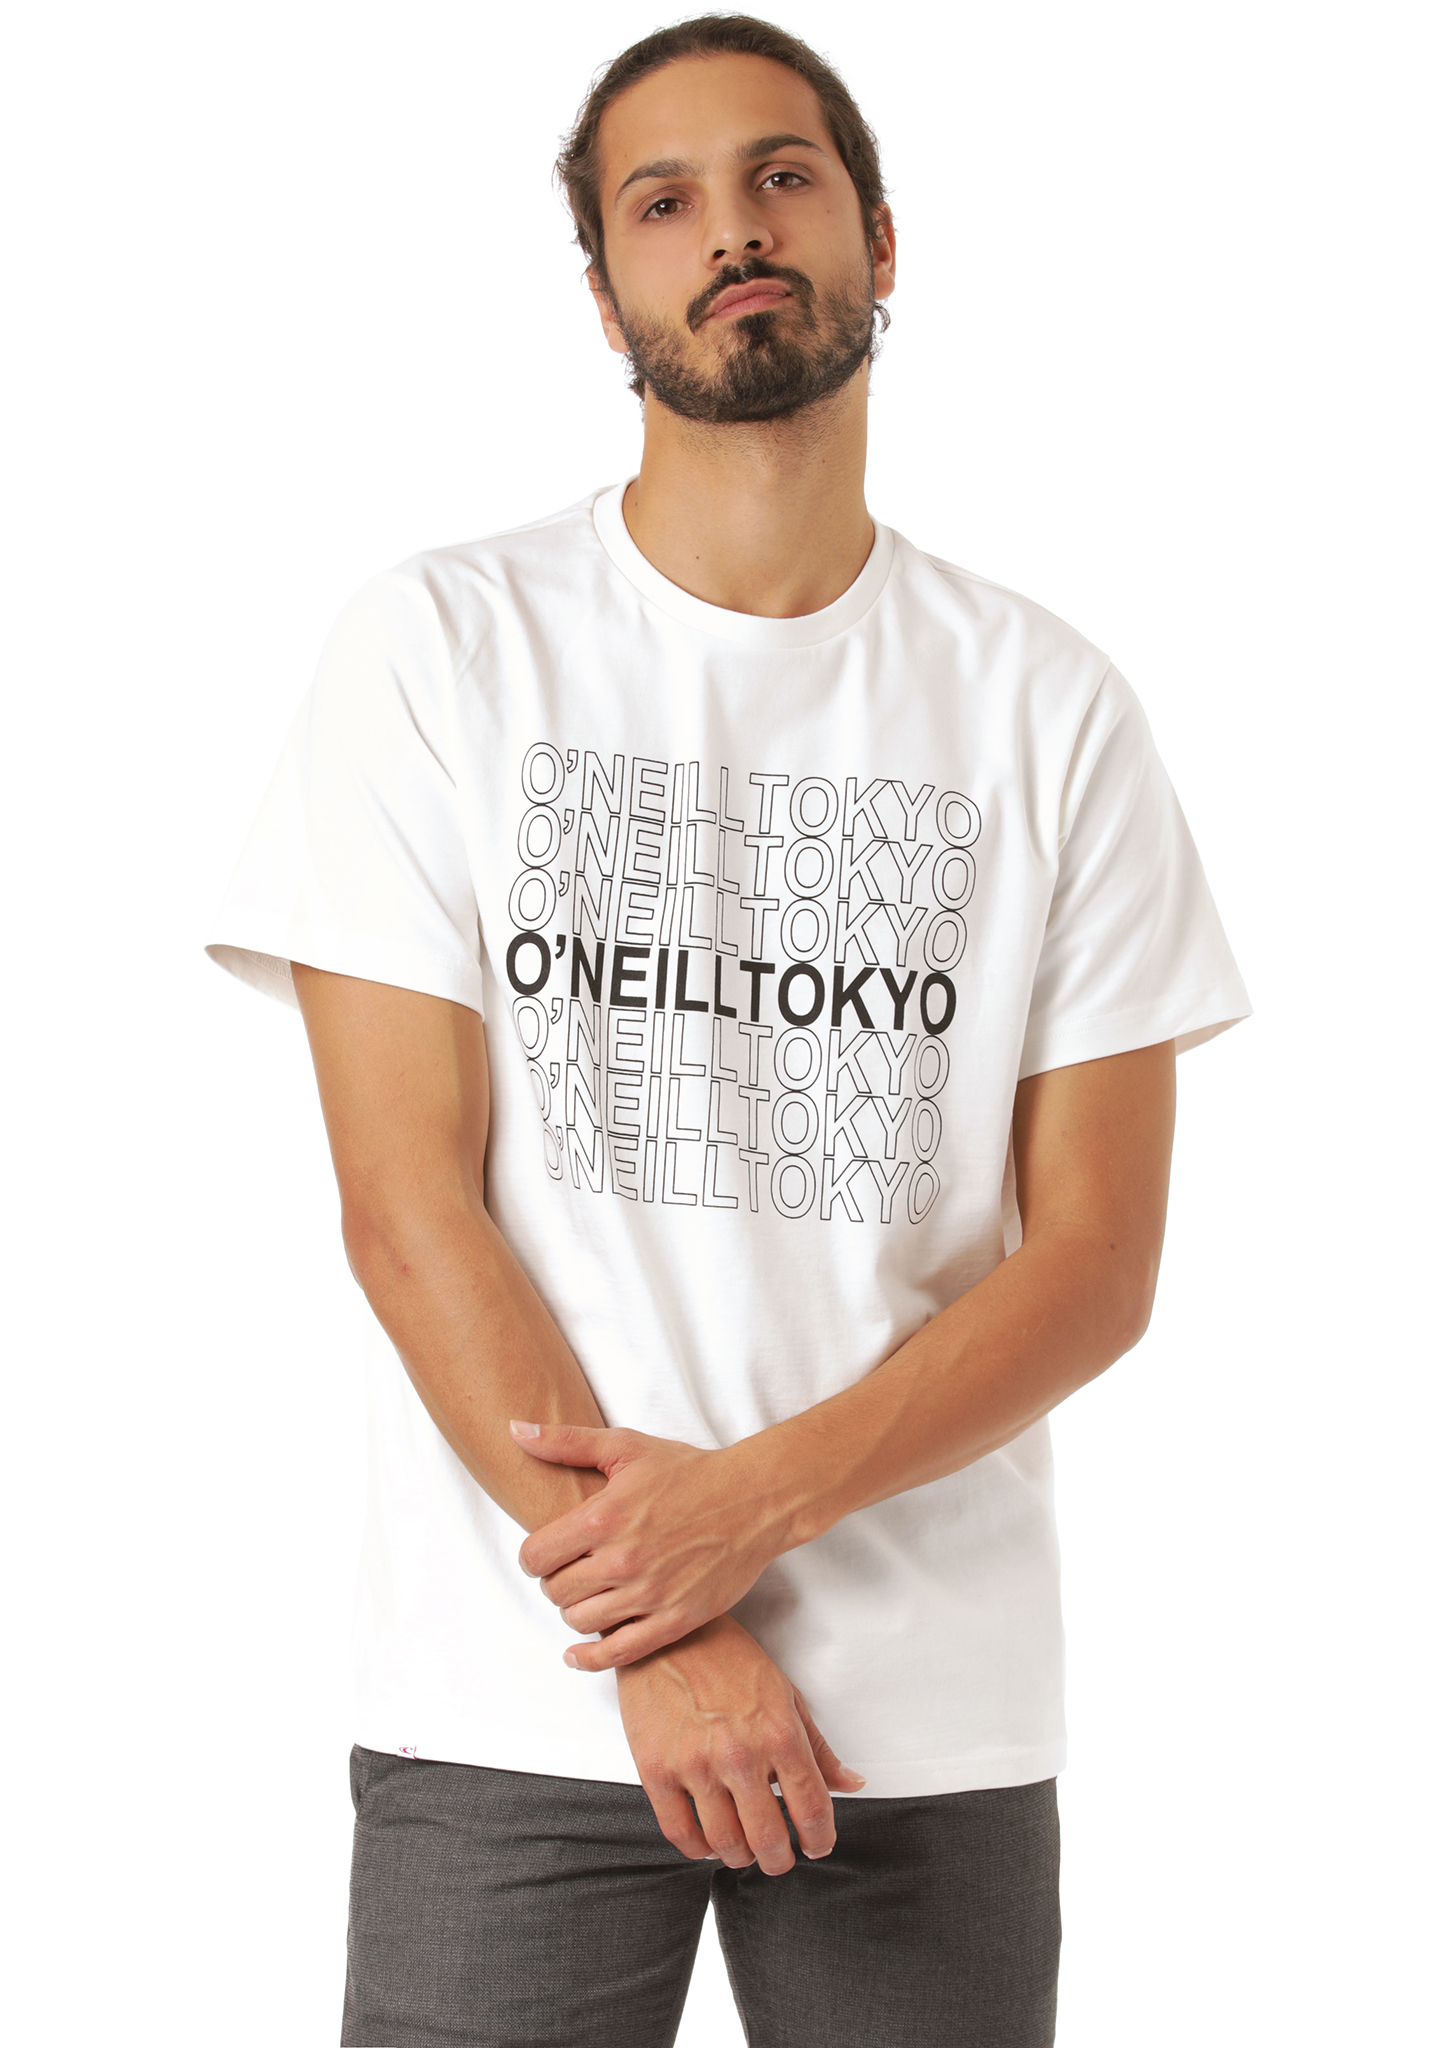 O'Neill Tokyo T-Shirt powder white M